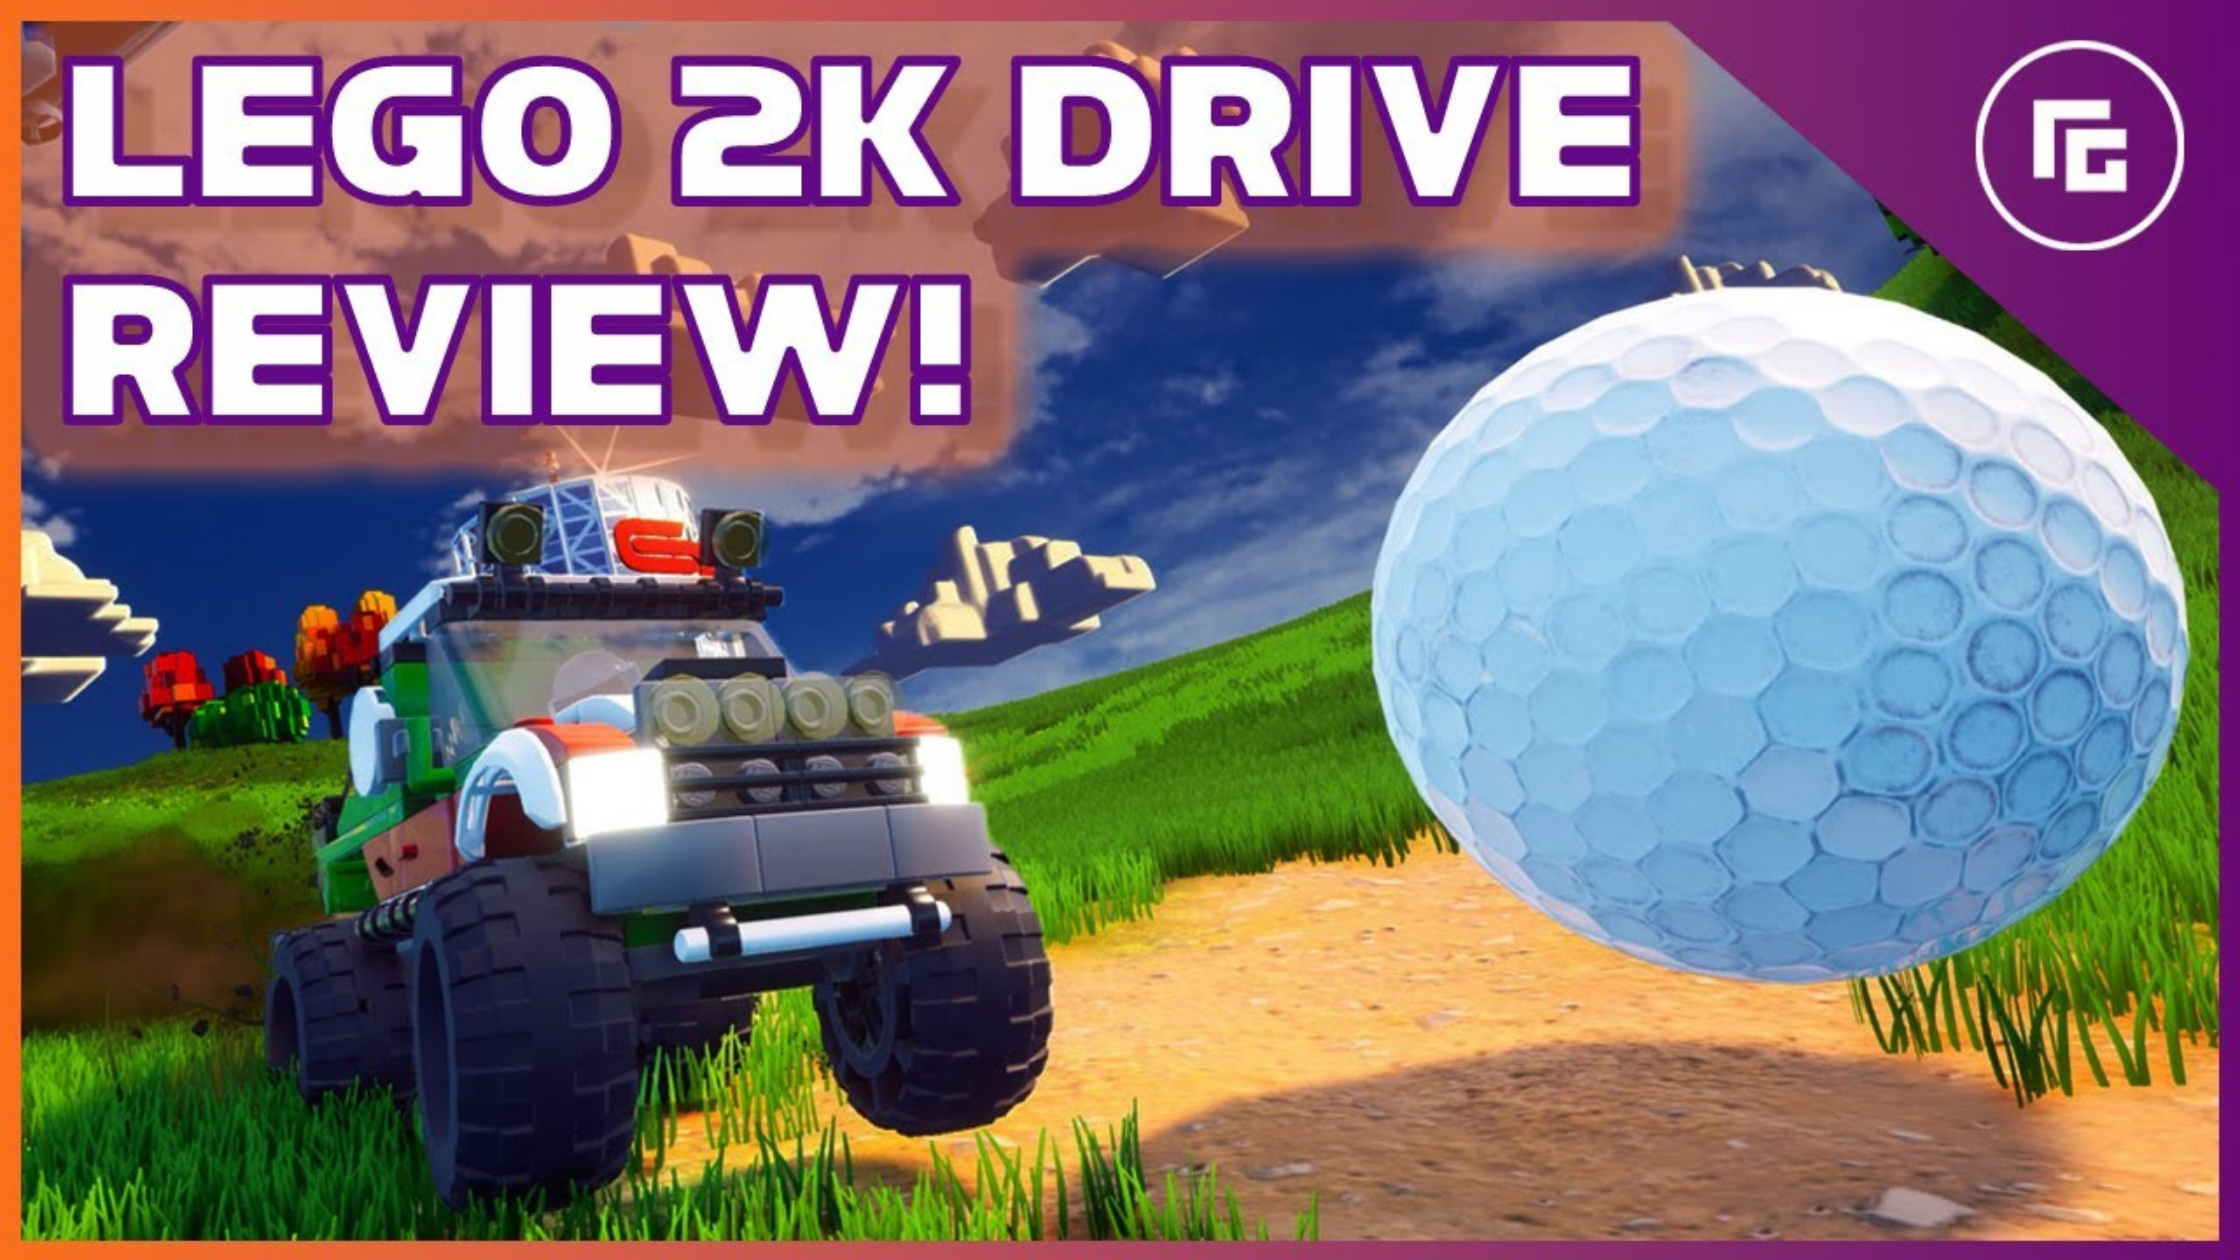 Is LEGO 2K Drive Cross-Platform compatible?